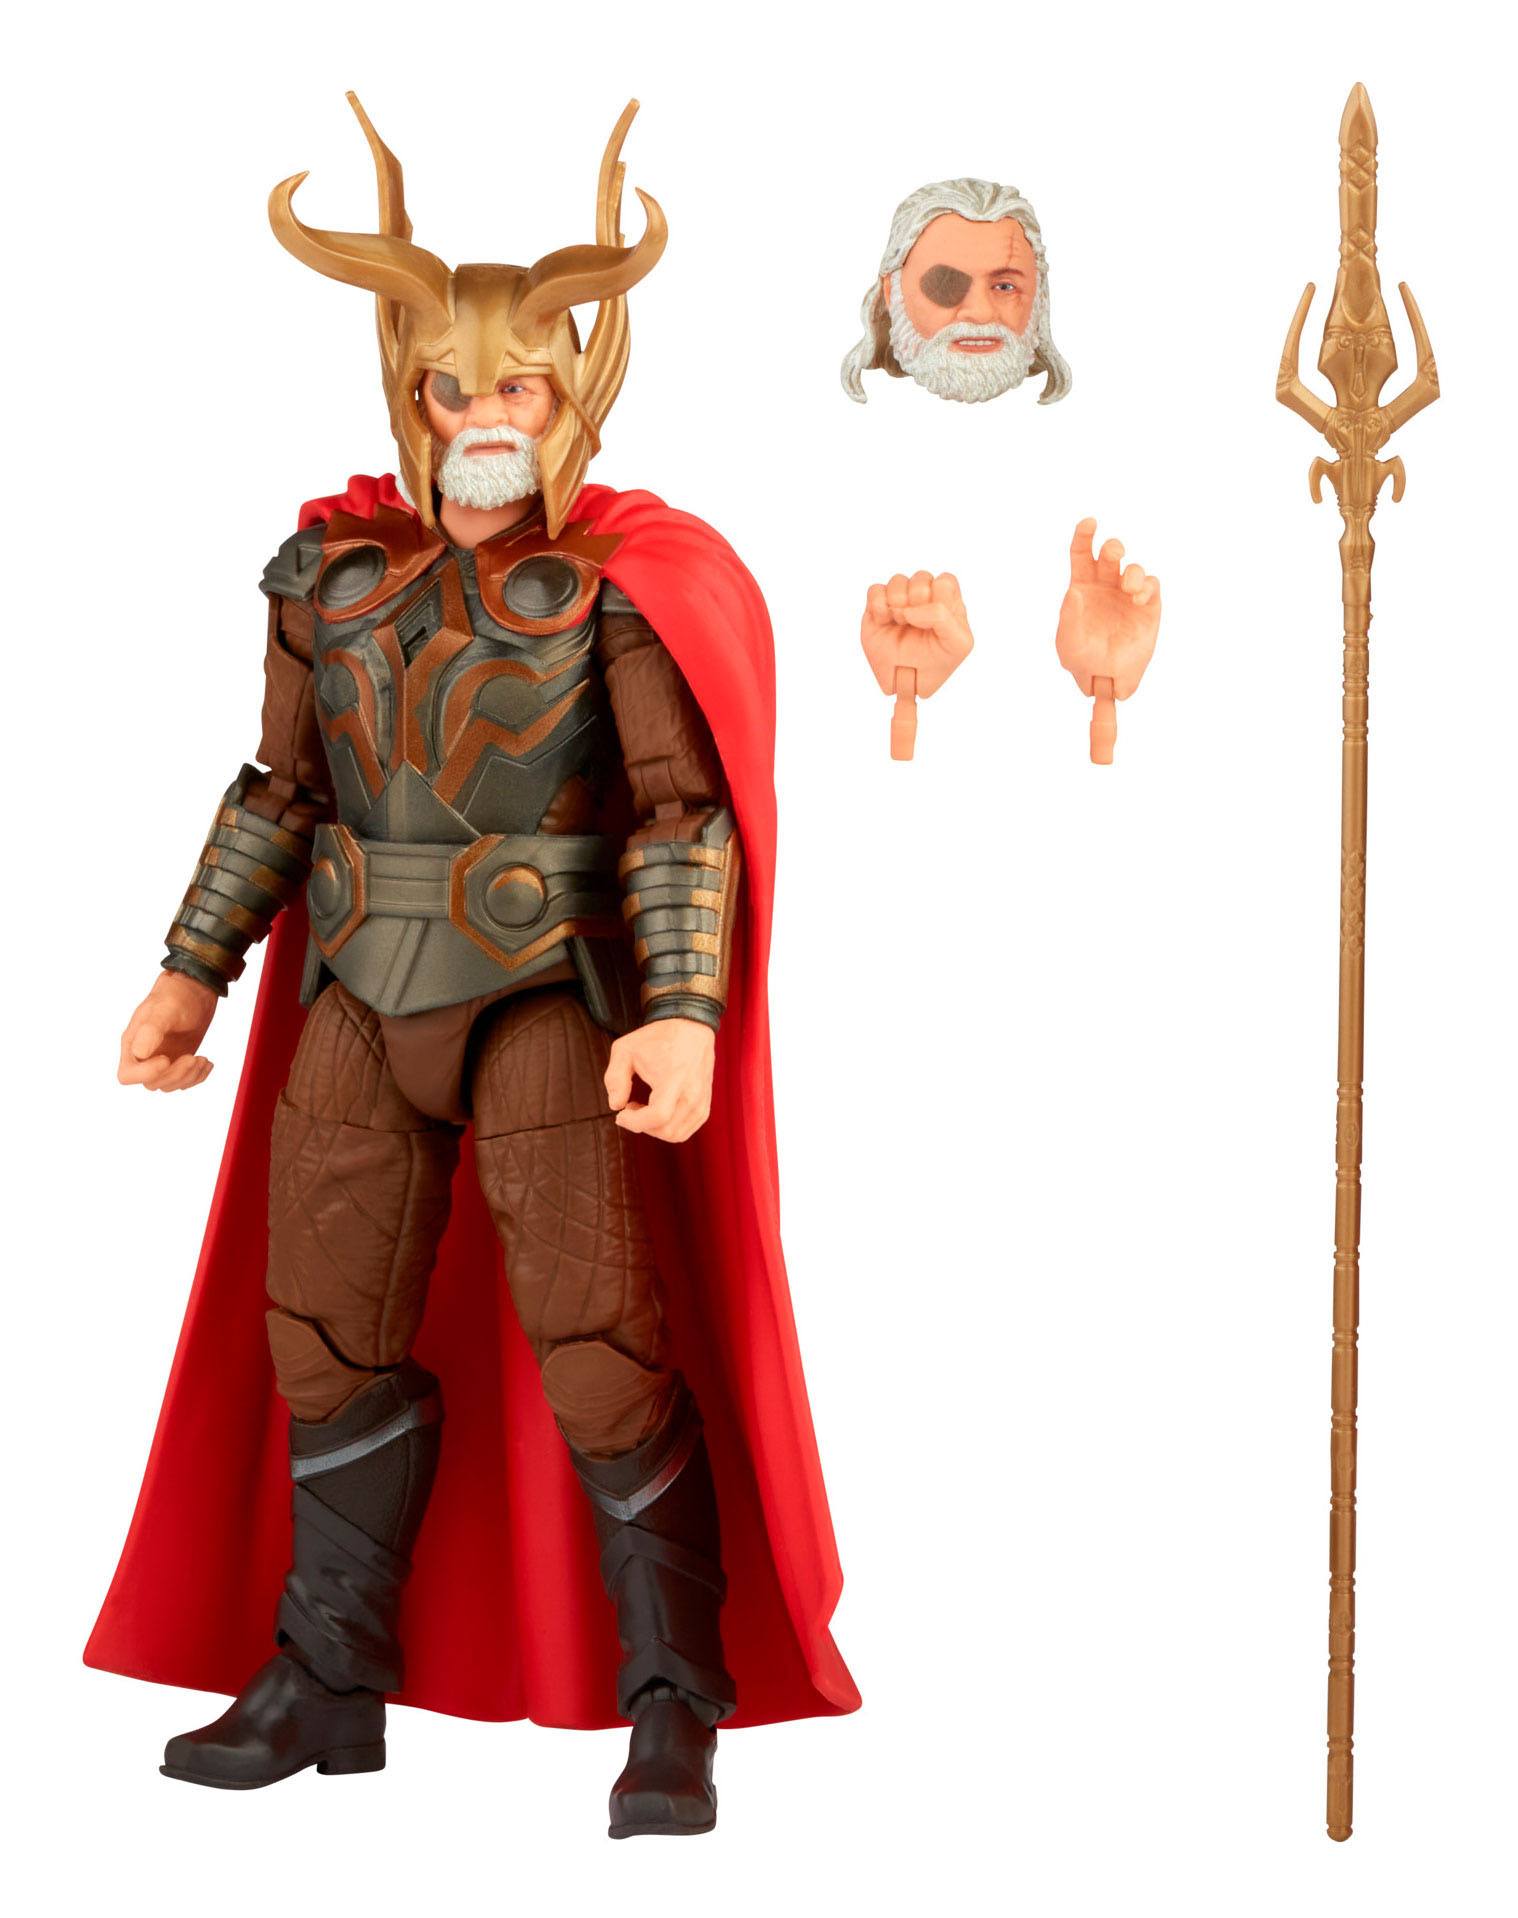 The Infinity Saga Marvel Legends Series Actionfigur 2021 Odin (Thor) 15 cm F01875L0 5010993839384